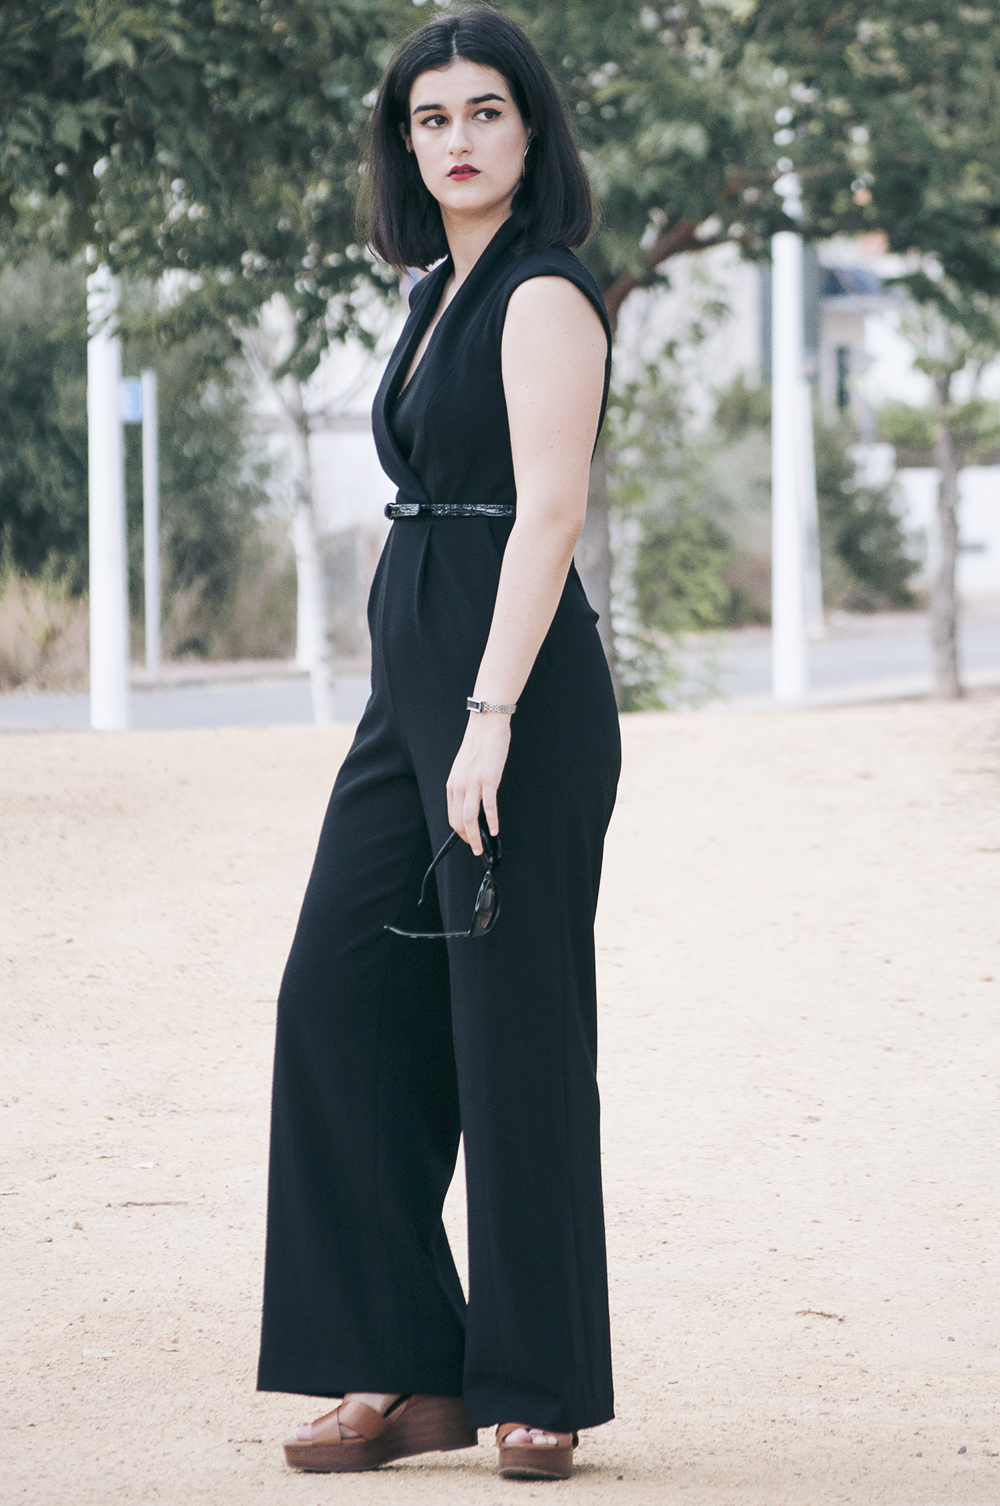 ootd somethingfashion valencia spain bloggers influencers calvinklein totalblack dresses summer lookdujour